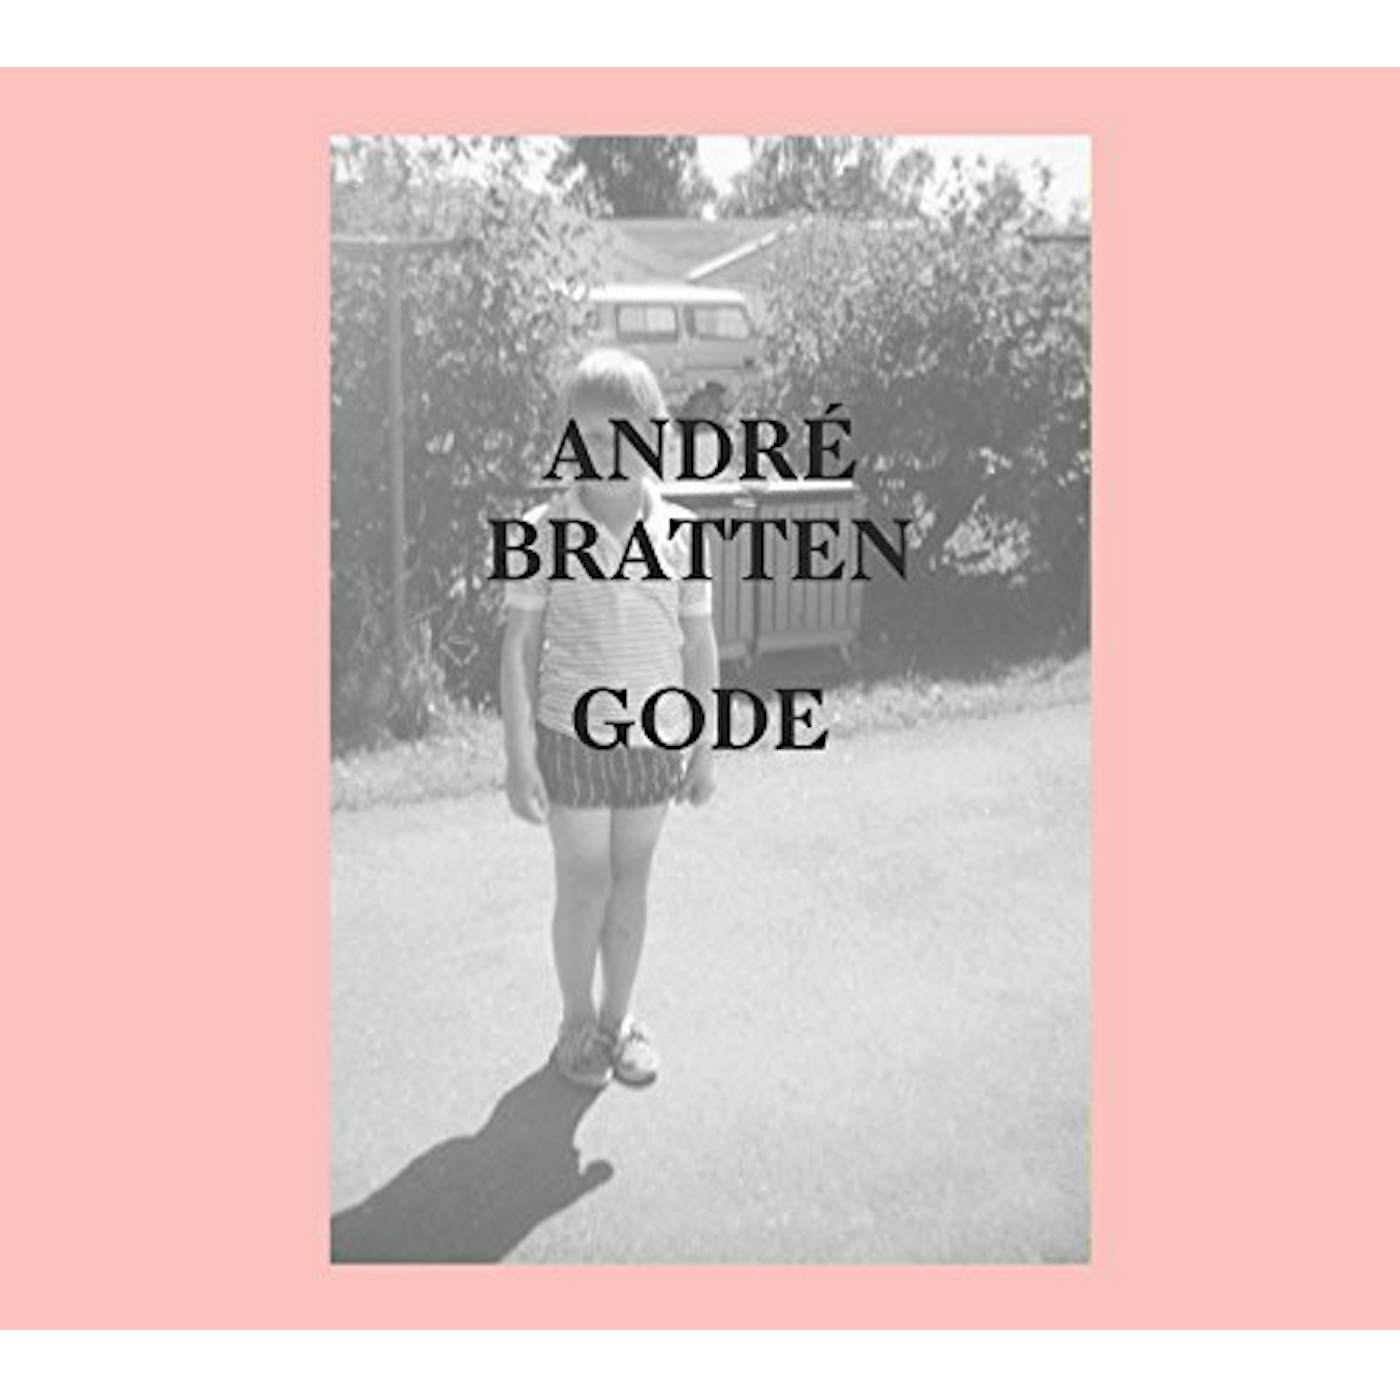 André Bratten Gode Vinyl Record